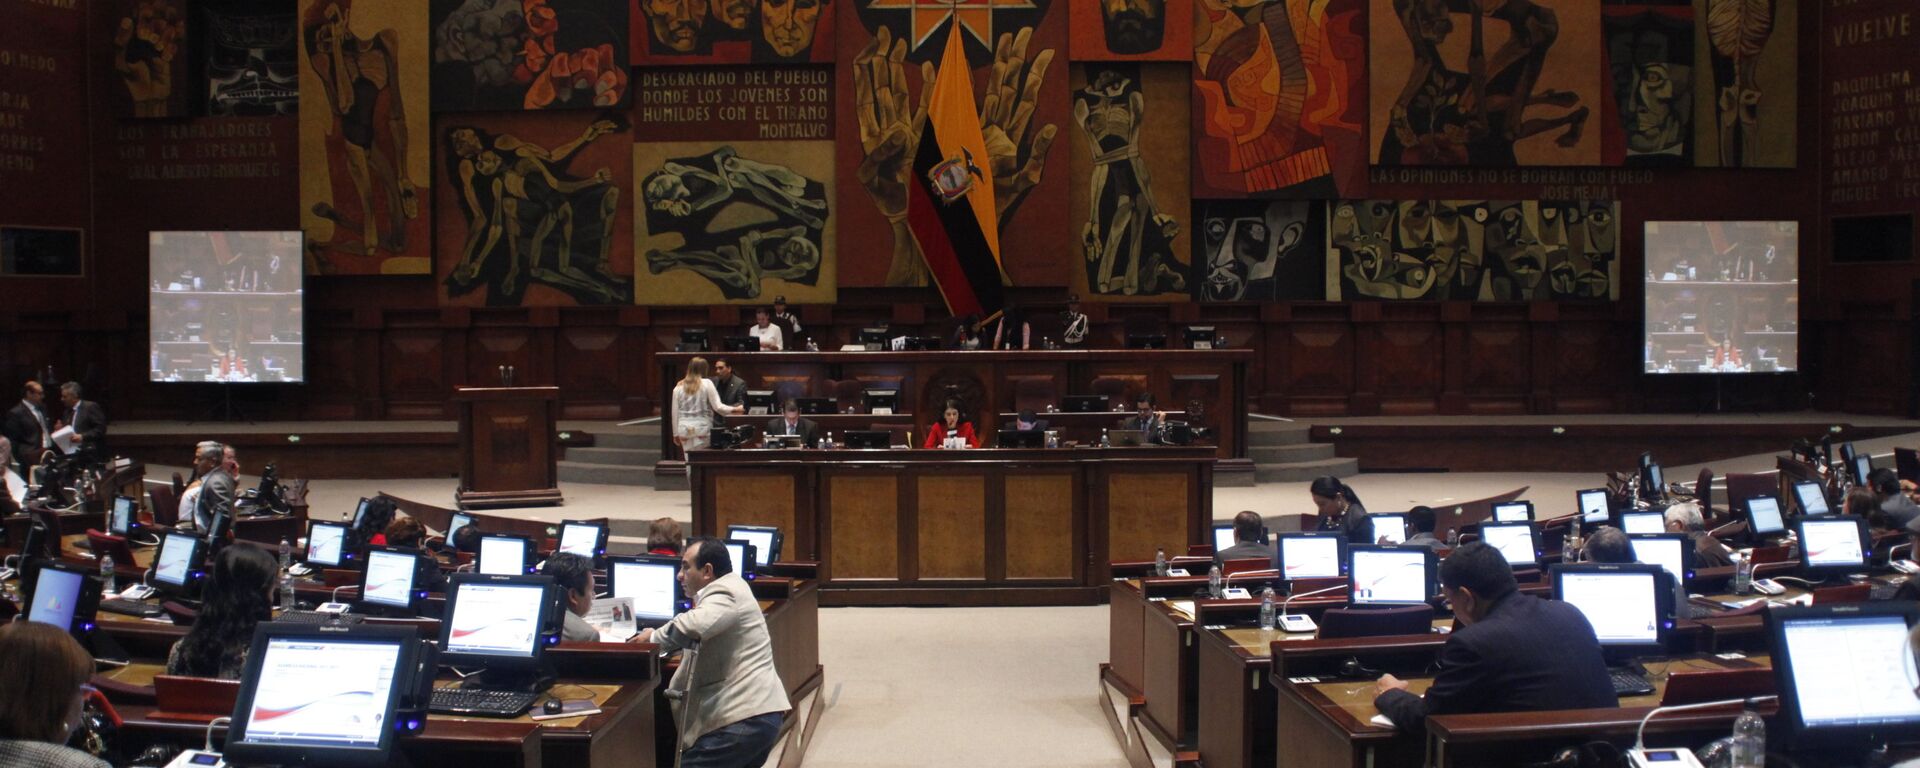 La Asamblea Nacional de Ecuador (archivo) - Sputnik Mundo, 1920, 15.05.2021